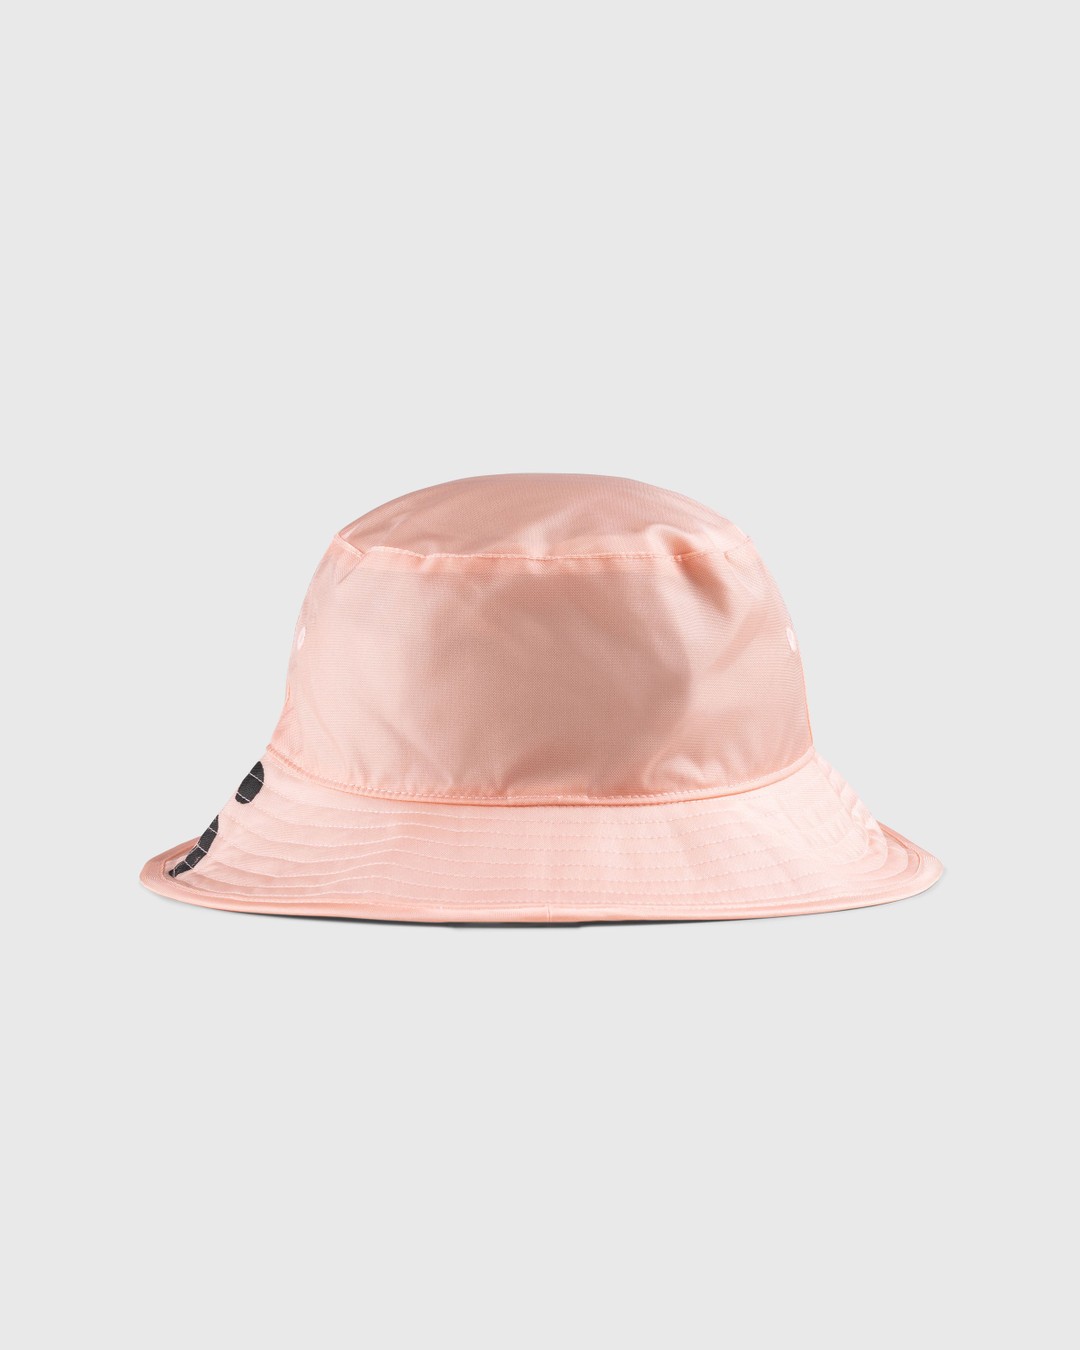 Acne Studios – Logo Bucket Hat Peach Pink - Hats - Pink - Image 2